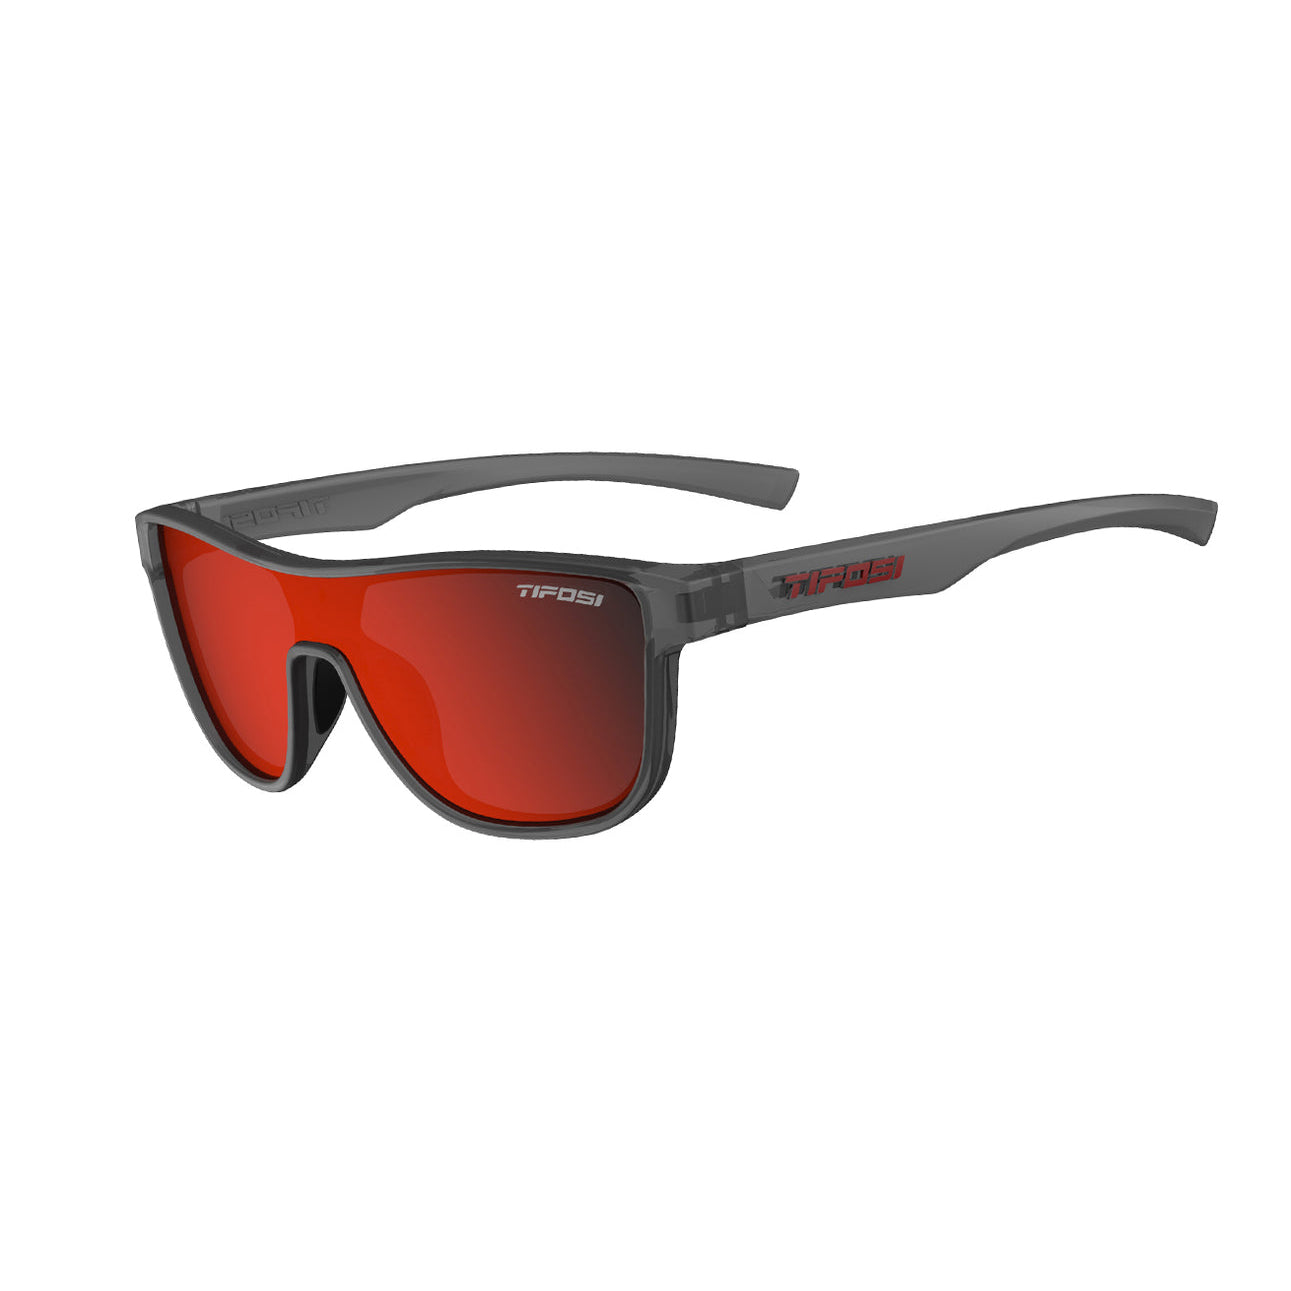 Smart Polarized Best Running Sunglasses With LCD Display, UVA/UVB